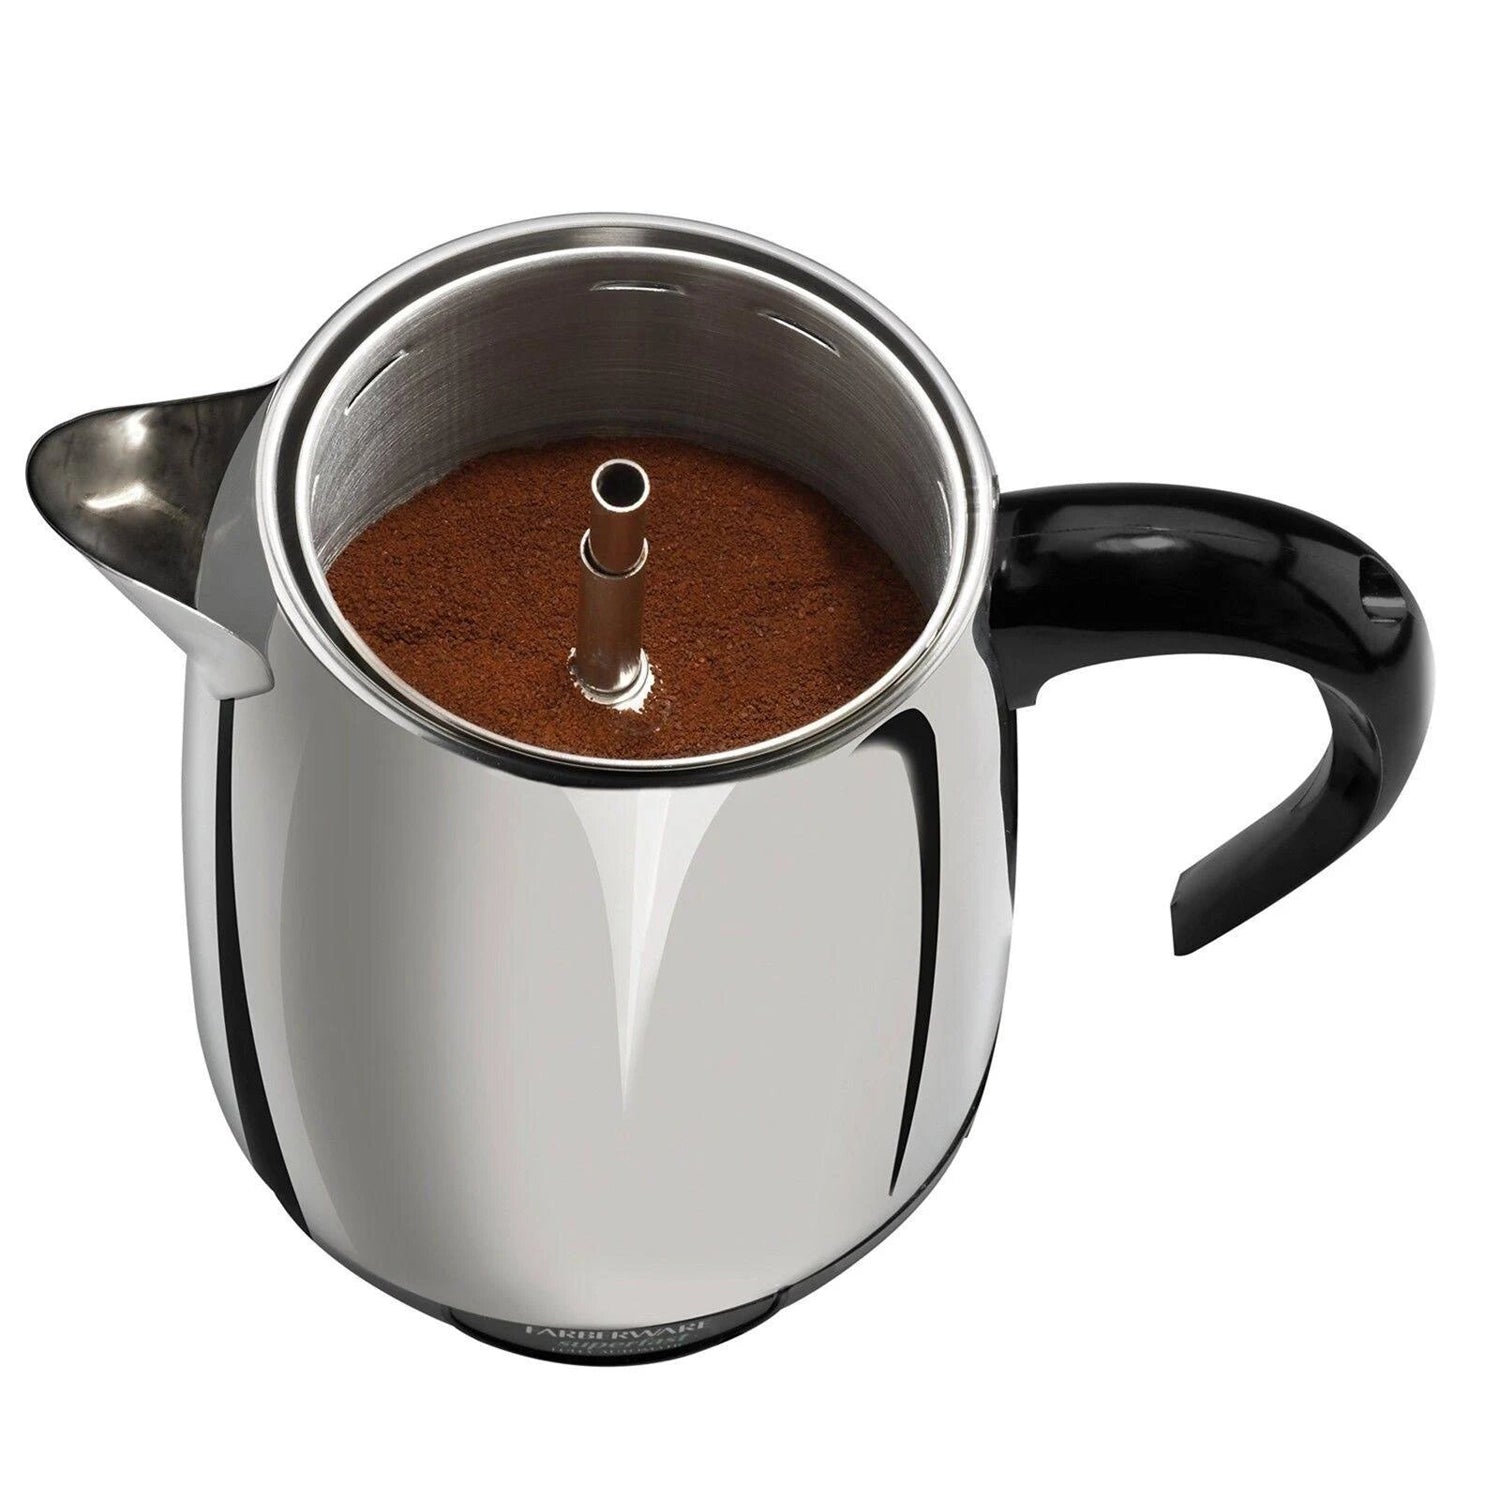 Farberware 4 Cup Stainless Steel Coffee Percolator - Power